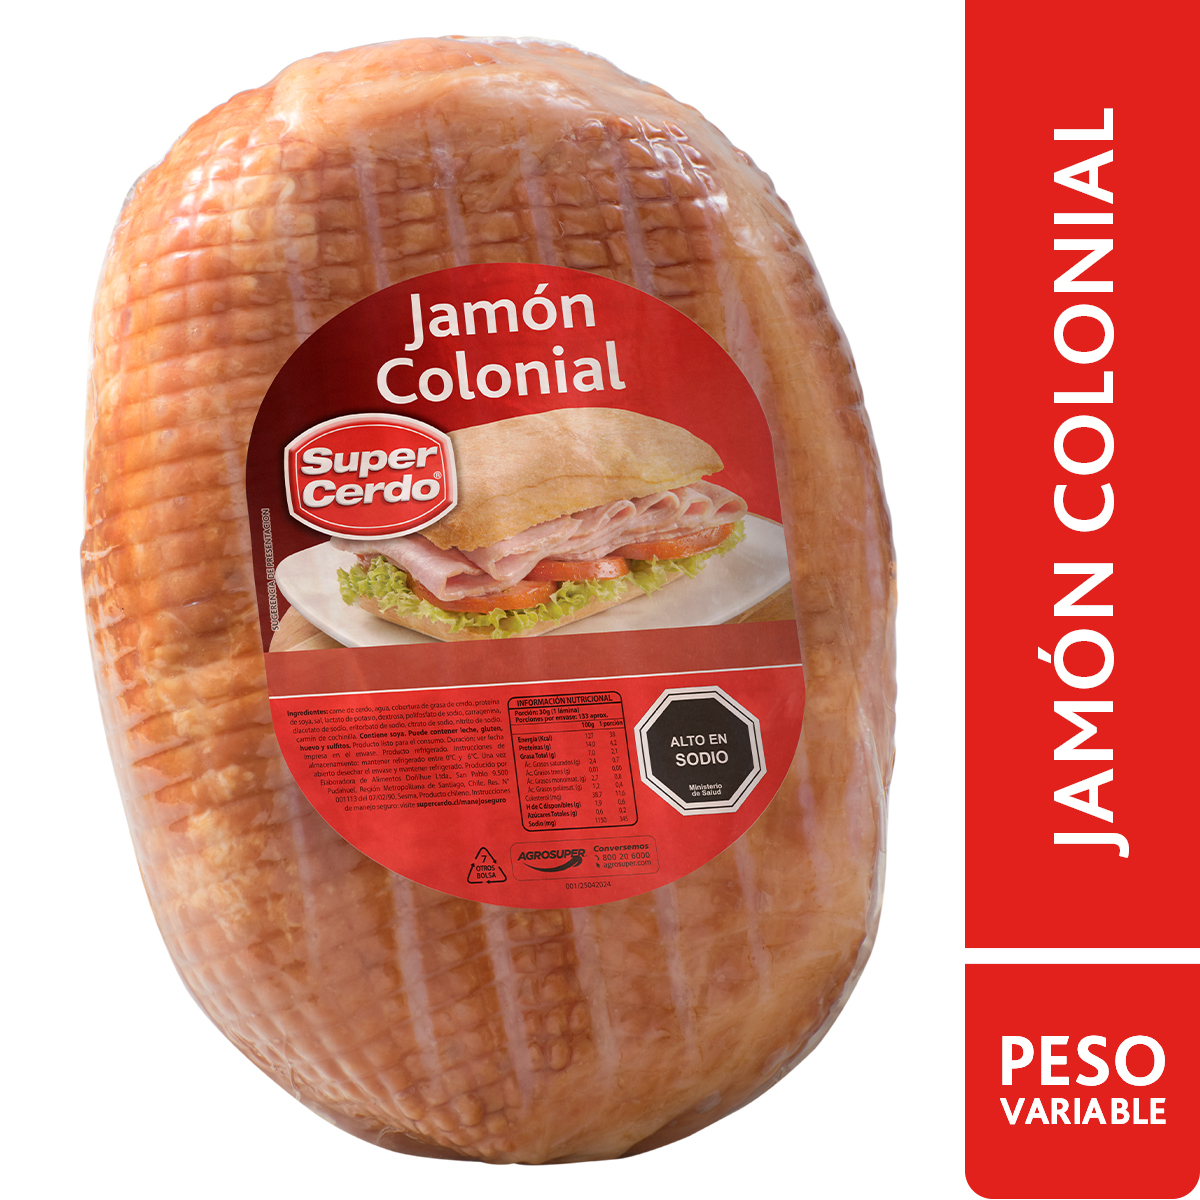 Jamón Colonial